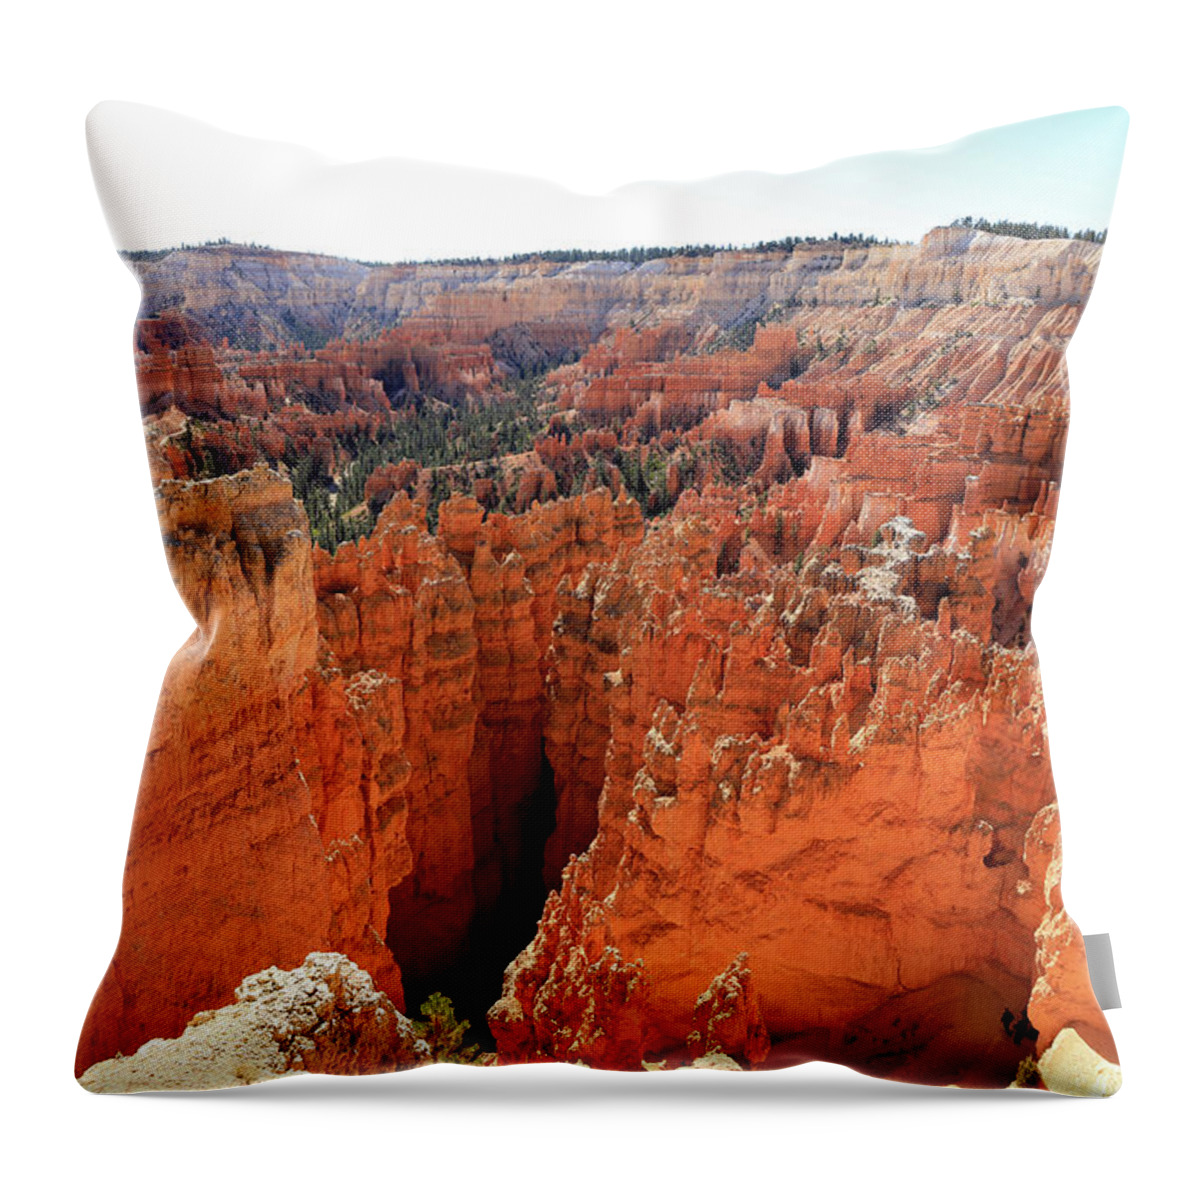 Bryce Canyon National Park Throw Pillow featuring the photograph Bryce Canyon National Park by Richard Krebs